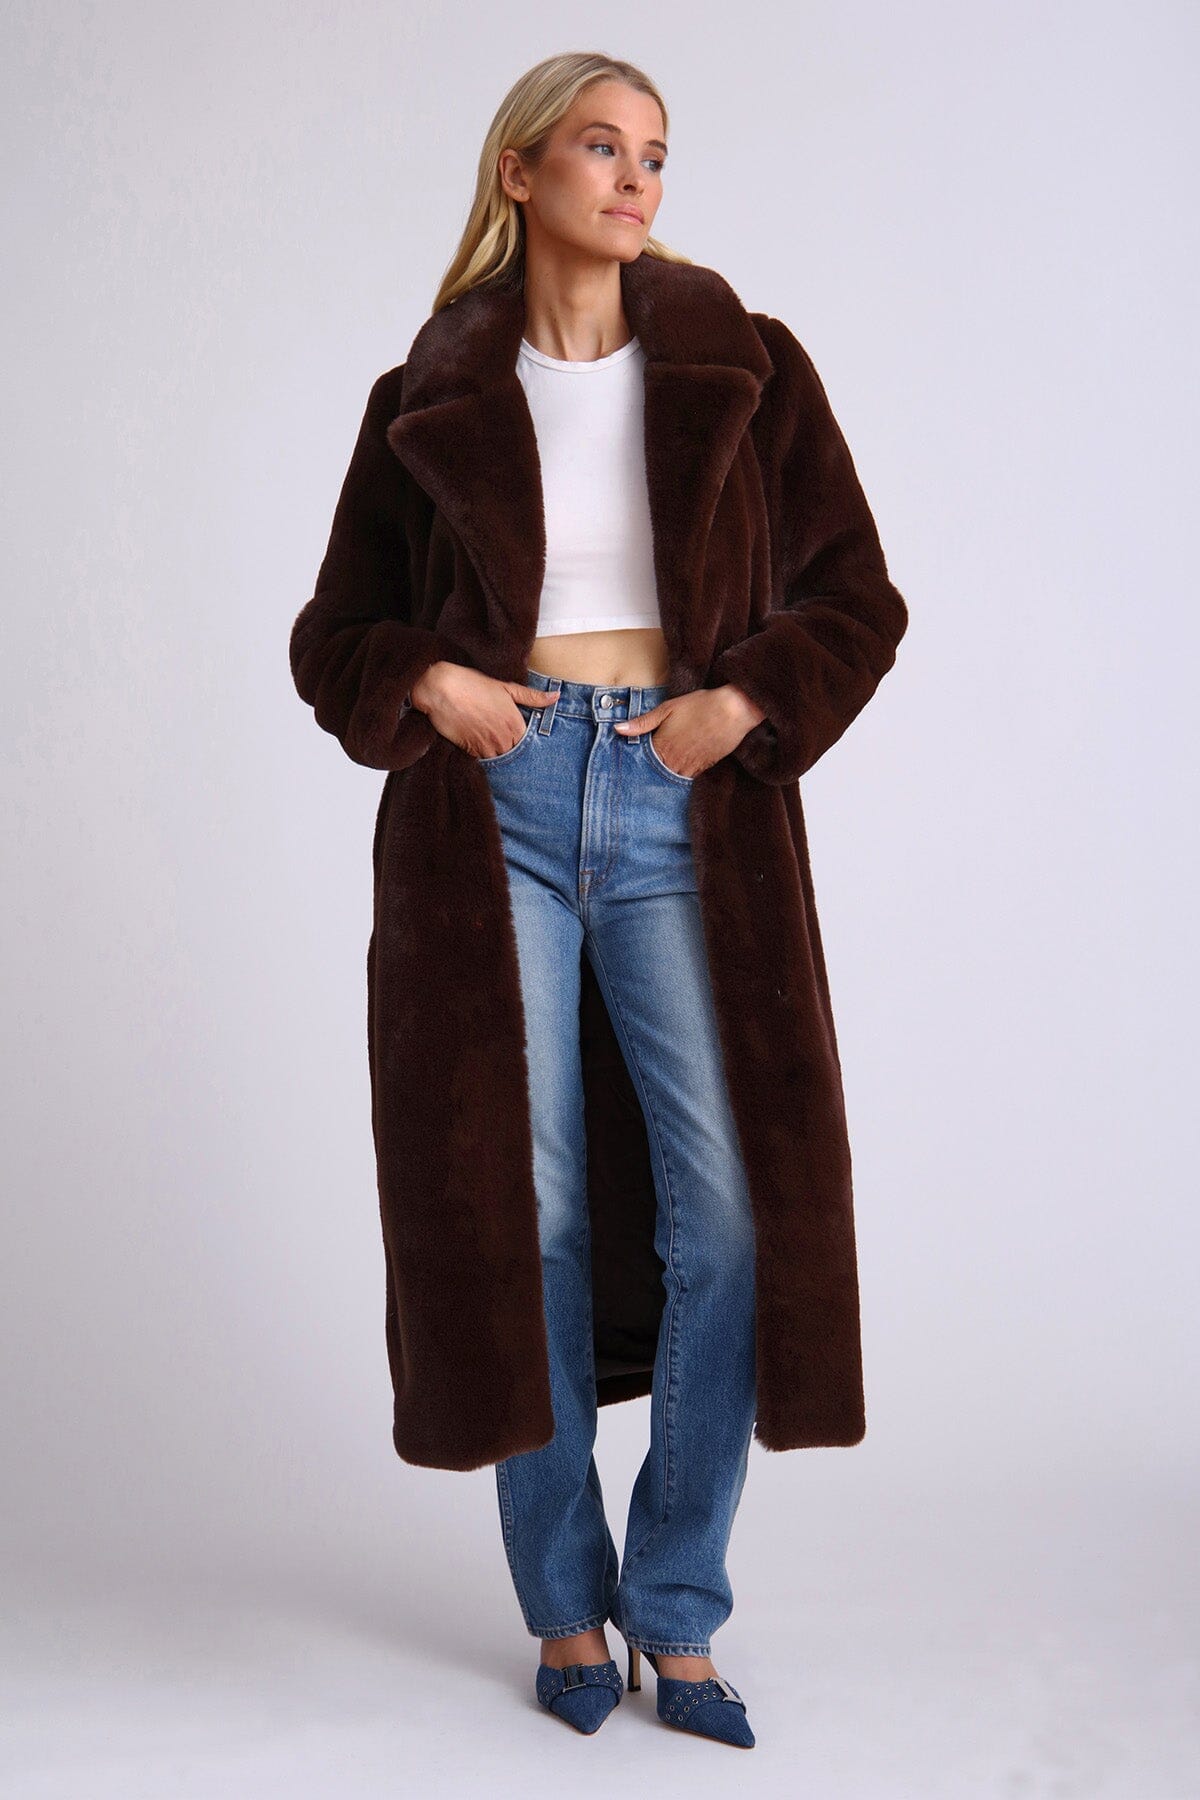 Women's brown long faux fur maxi coat jacket for Fall Winter fashion trends by Avec Les Filles